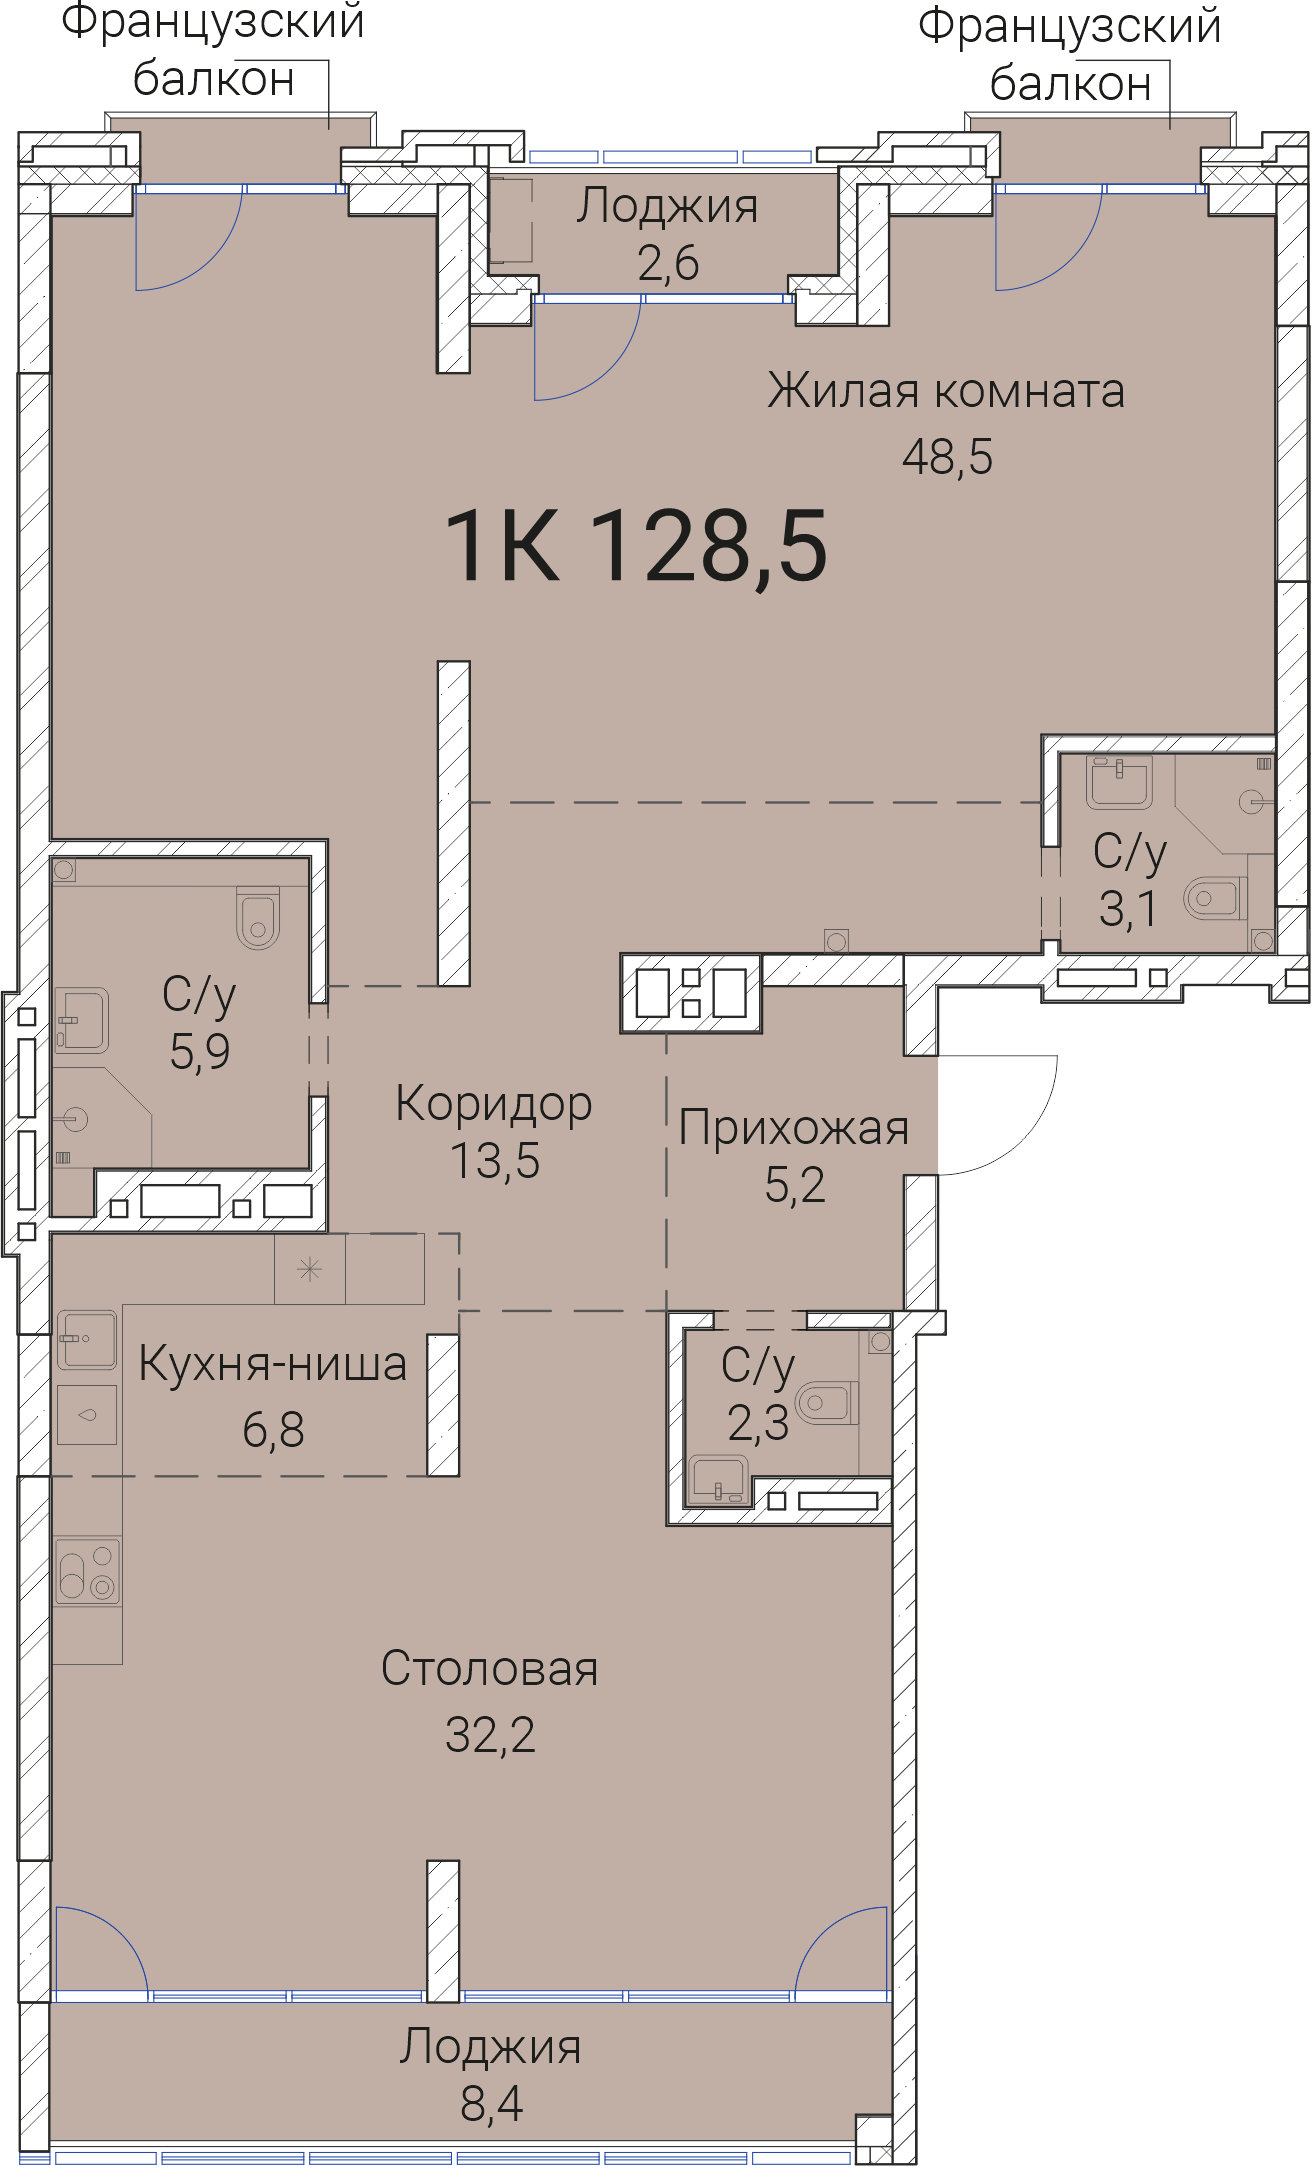 4-комнатная квартира 128.5м2 ЖК Тайм Сквер